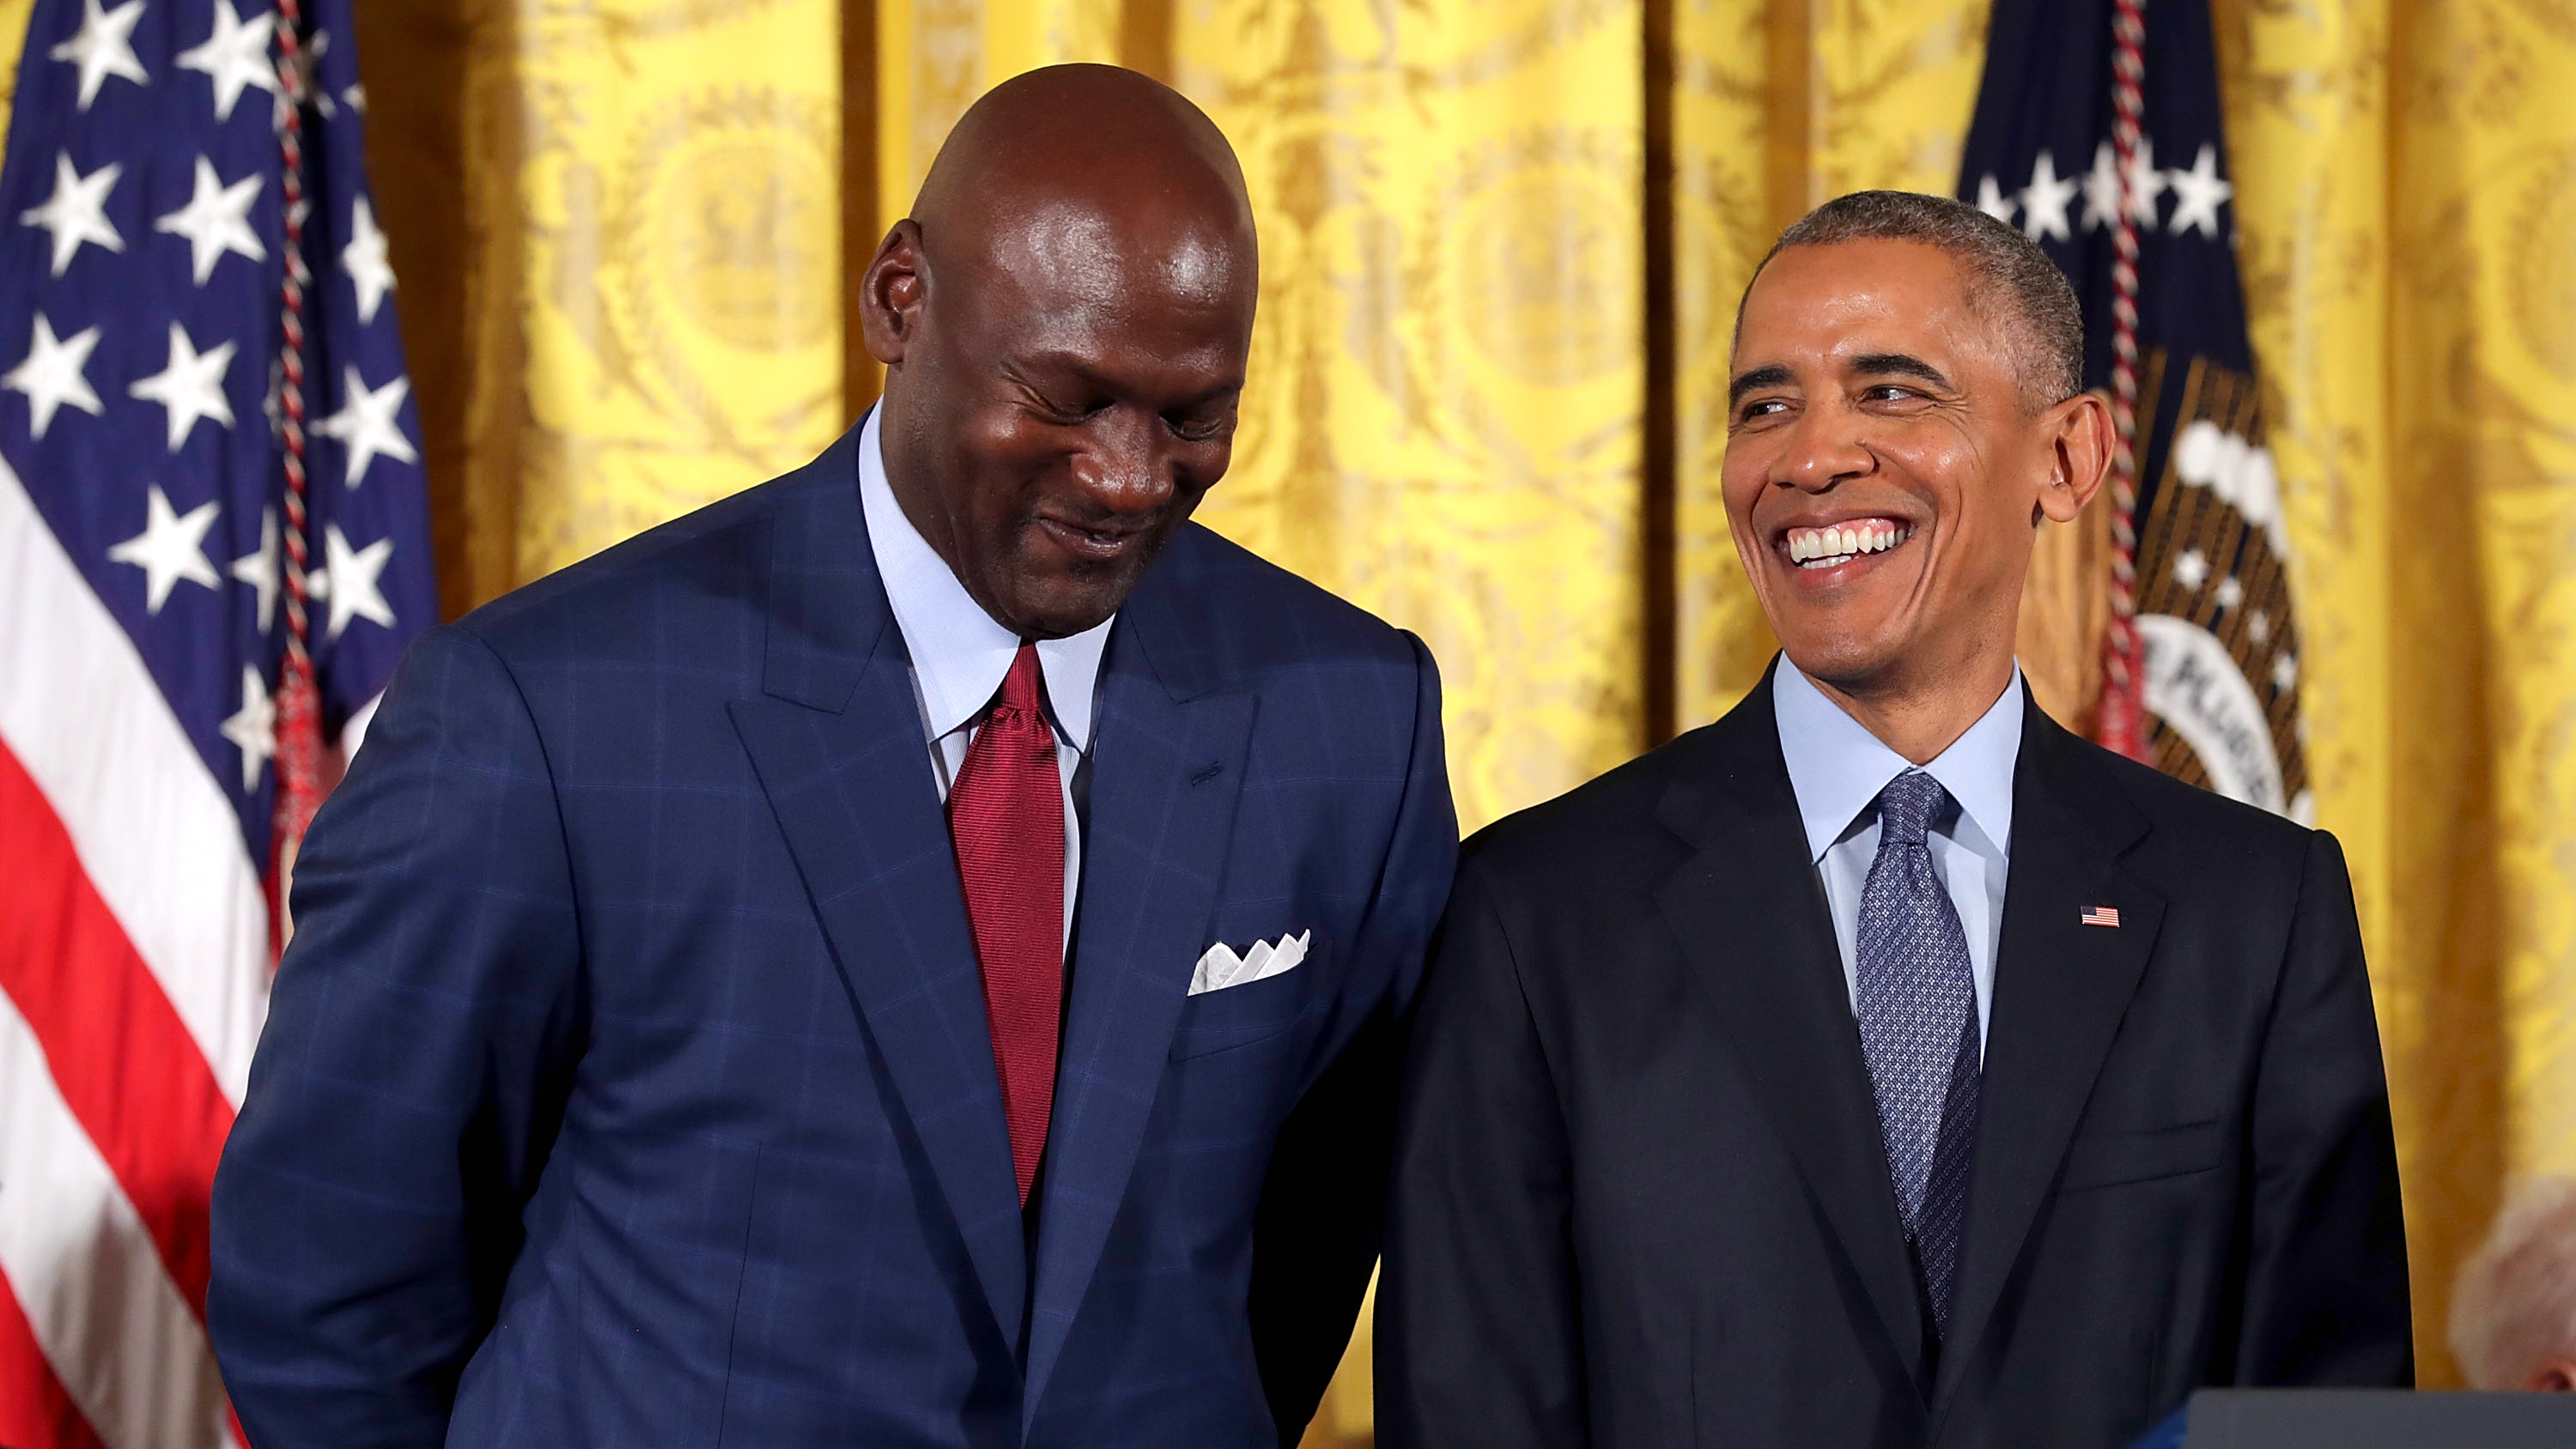 President Barack Obama presents former NBA star Michael Jordan with the Presidential Medal of Freedom